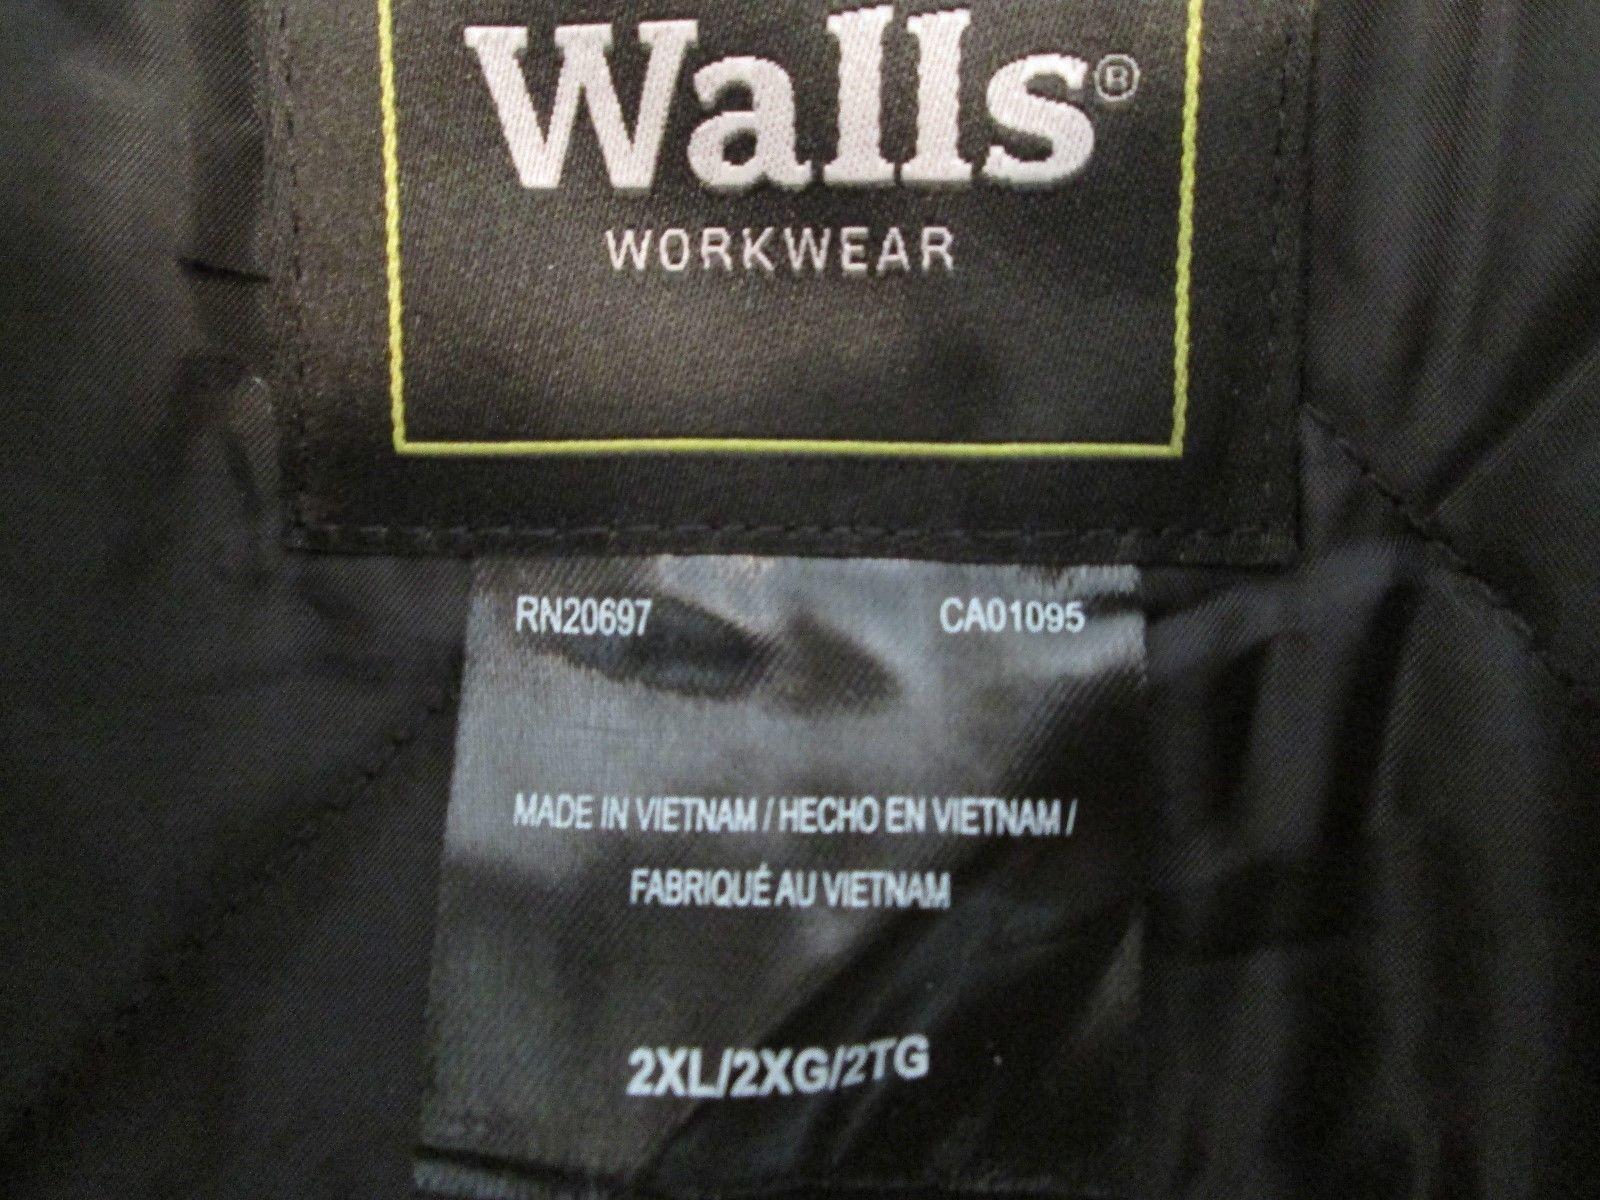 Walls Workwear Logo - Walls Workwear Artic Zone Tough Cotton Duck Water Repellent Overalls ...